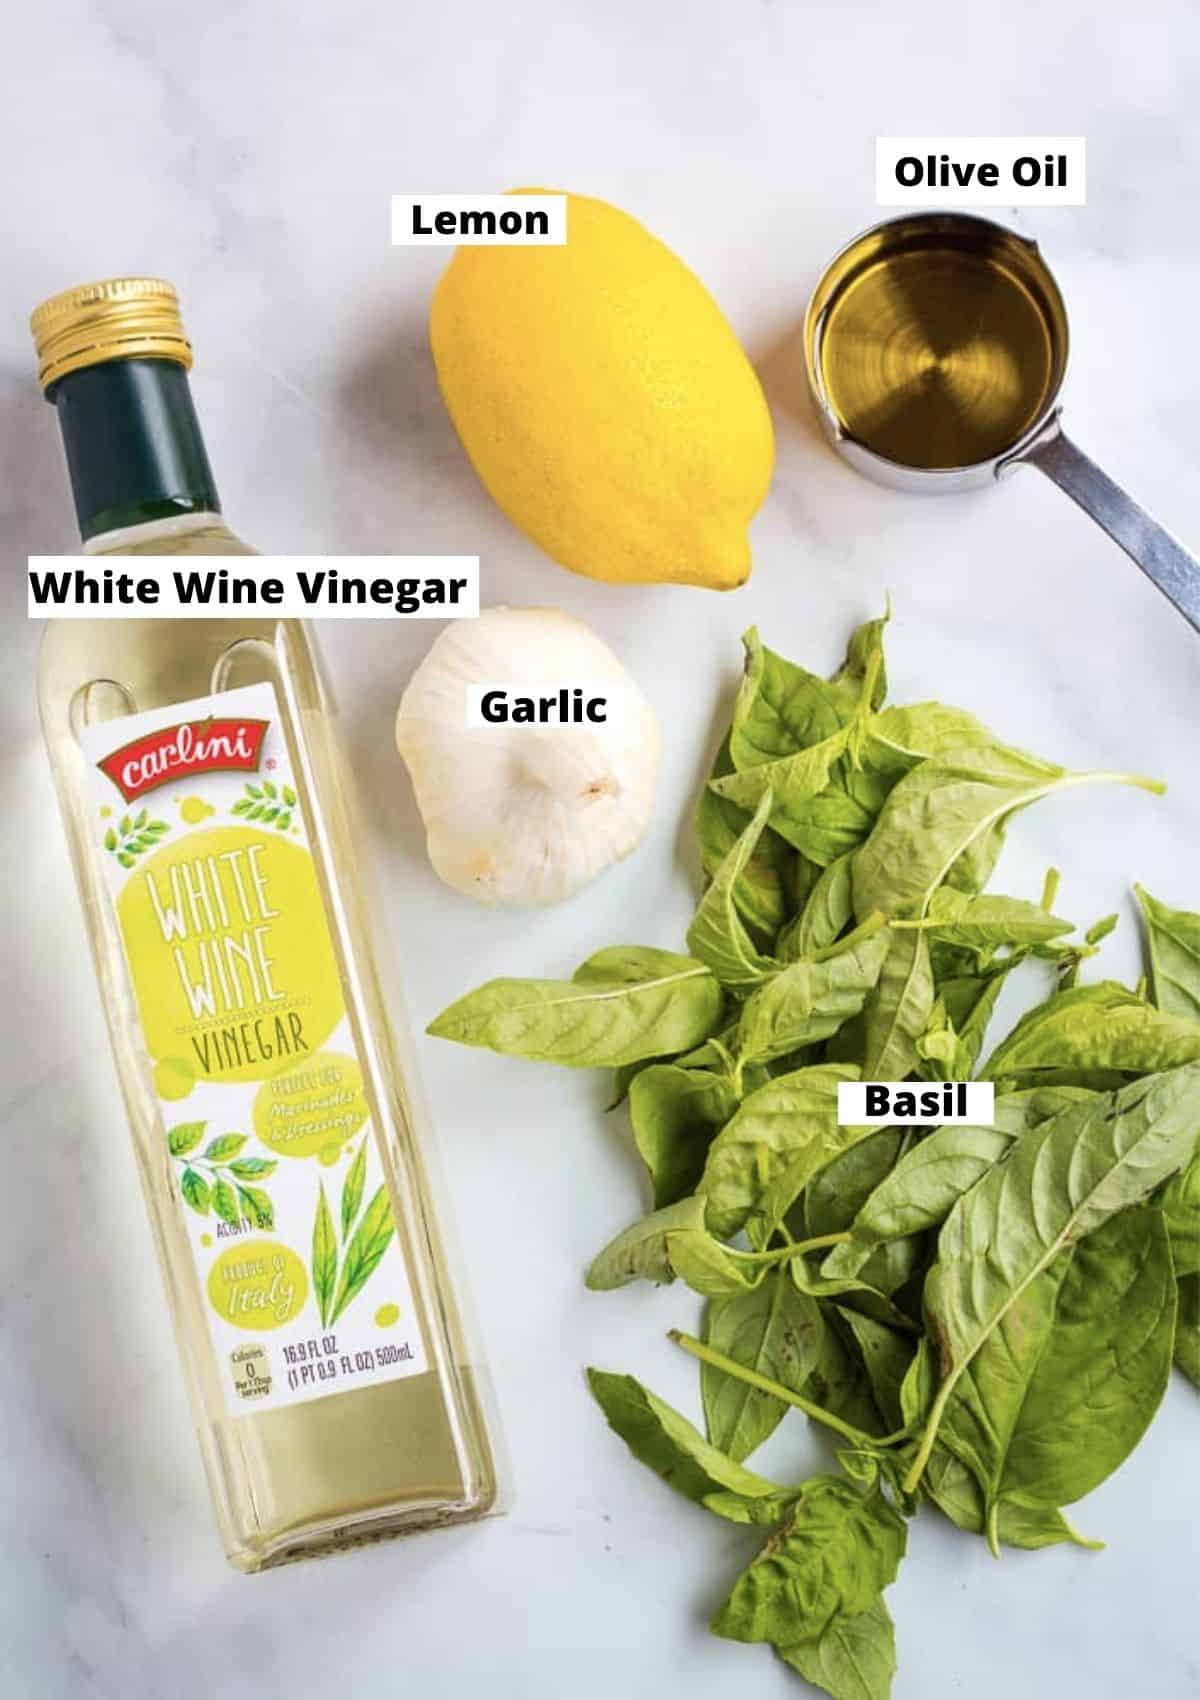 Basil Sauce Ingredients: Olive oil, basil, garlic, lemon, white wine vinegar. 
